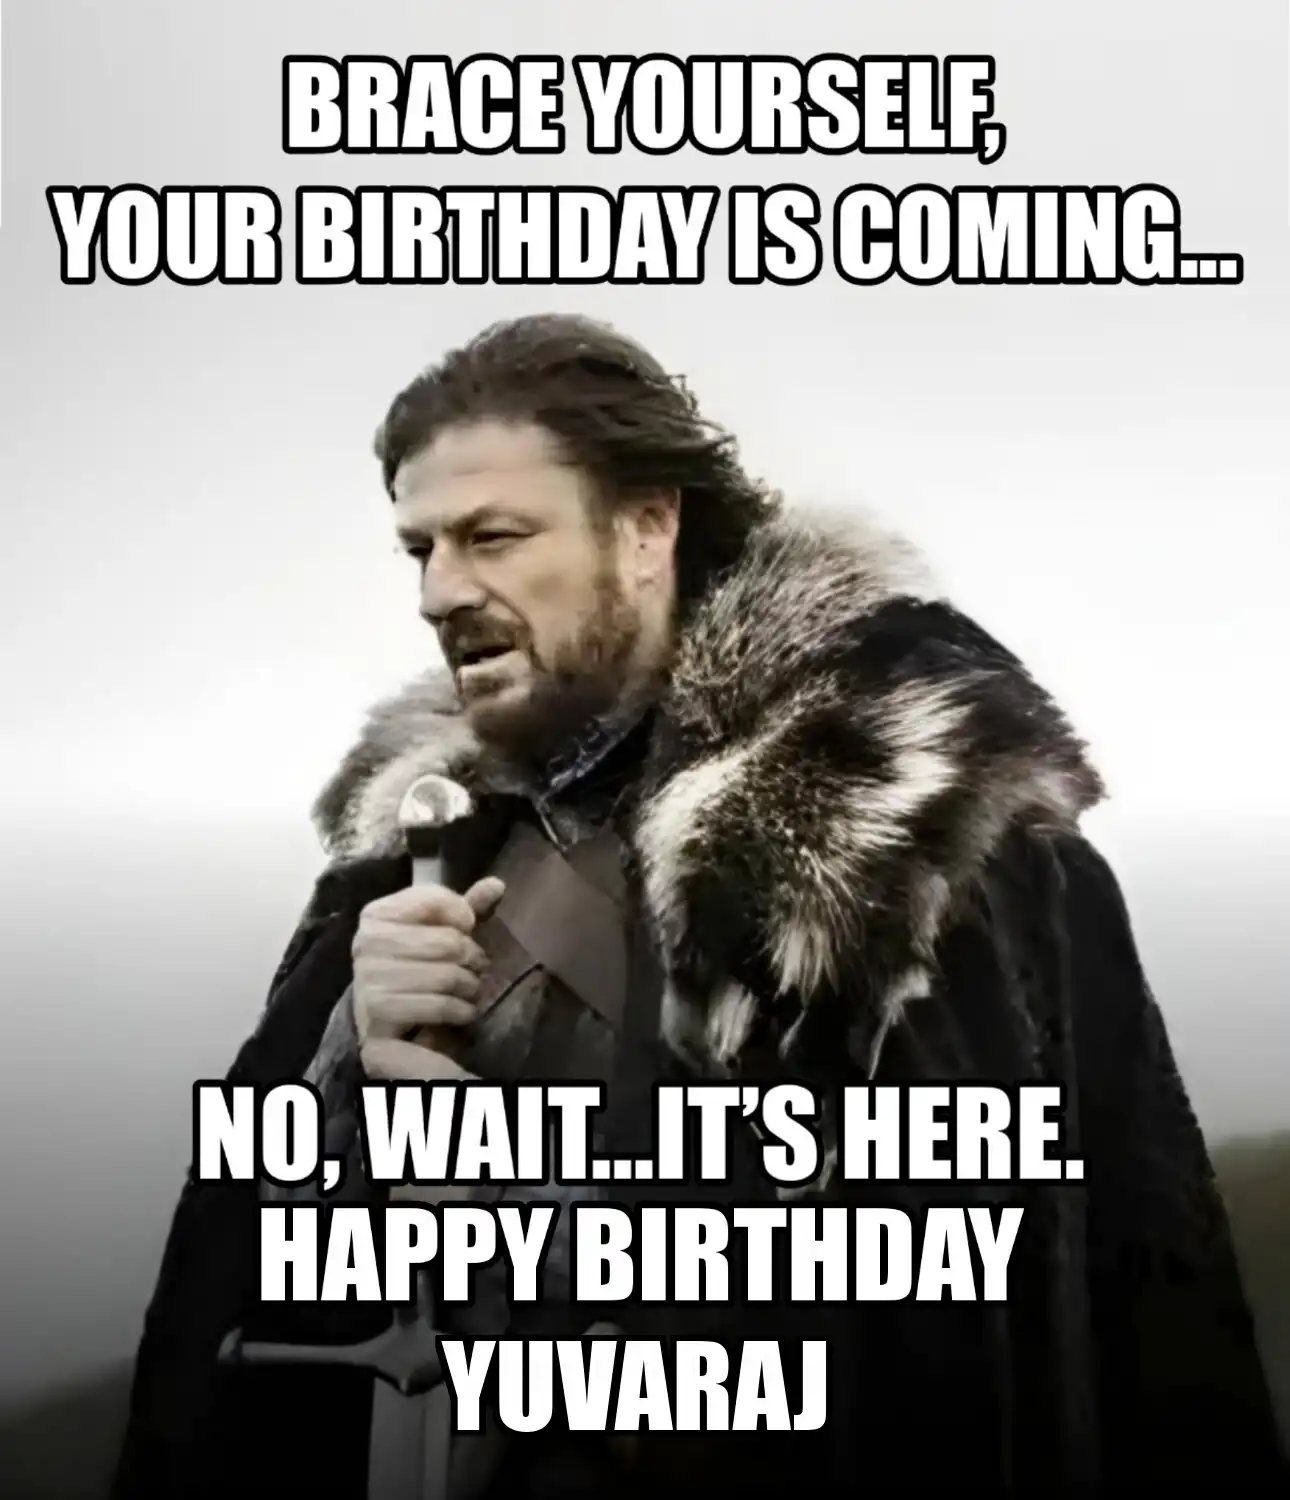 Happy Birthday Yuvaraj Brace Yourself Your Birthday Is Coming Meme